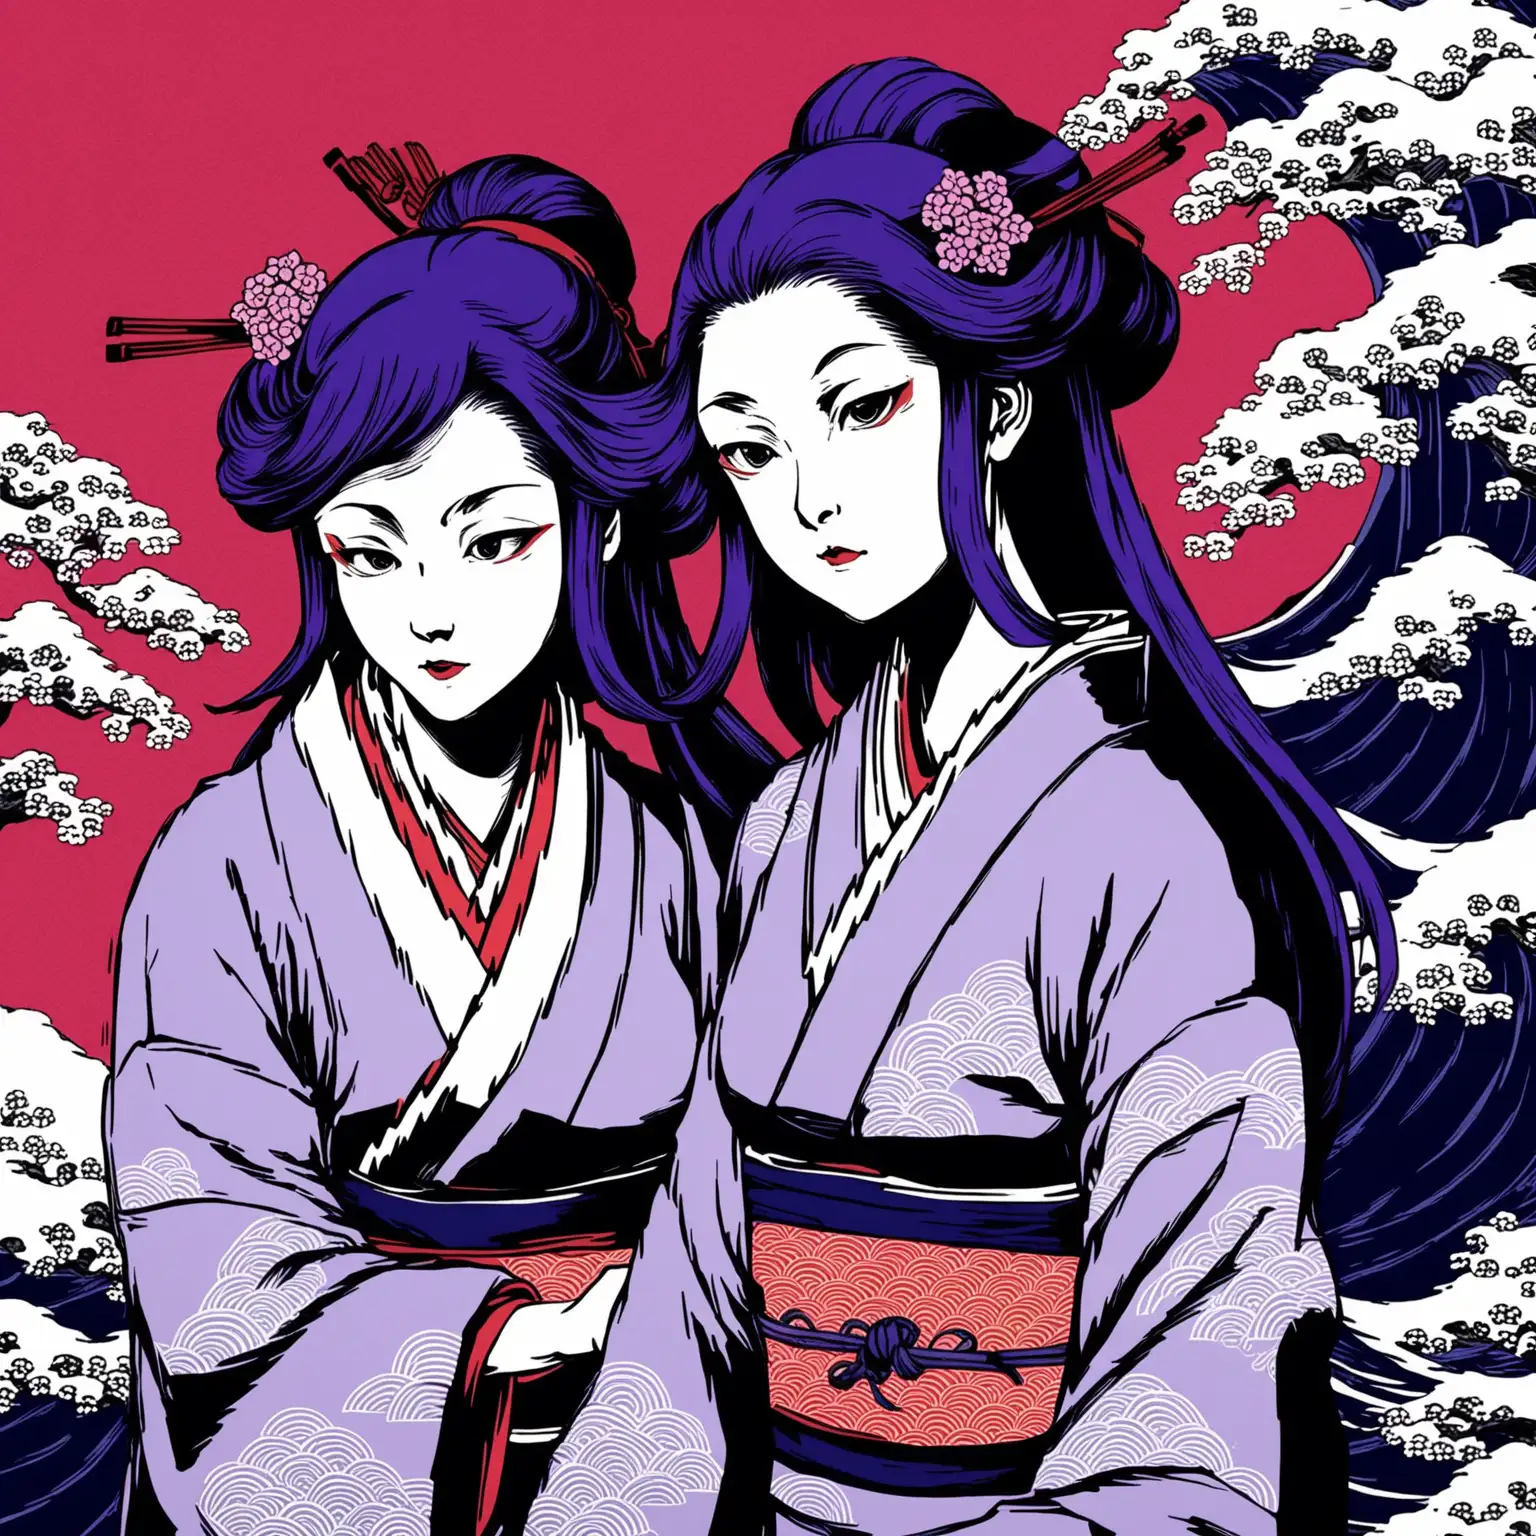 Ukiyo-e style, 2D girls, vivid colors, high contrast, purple tone